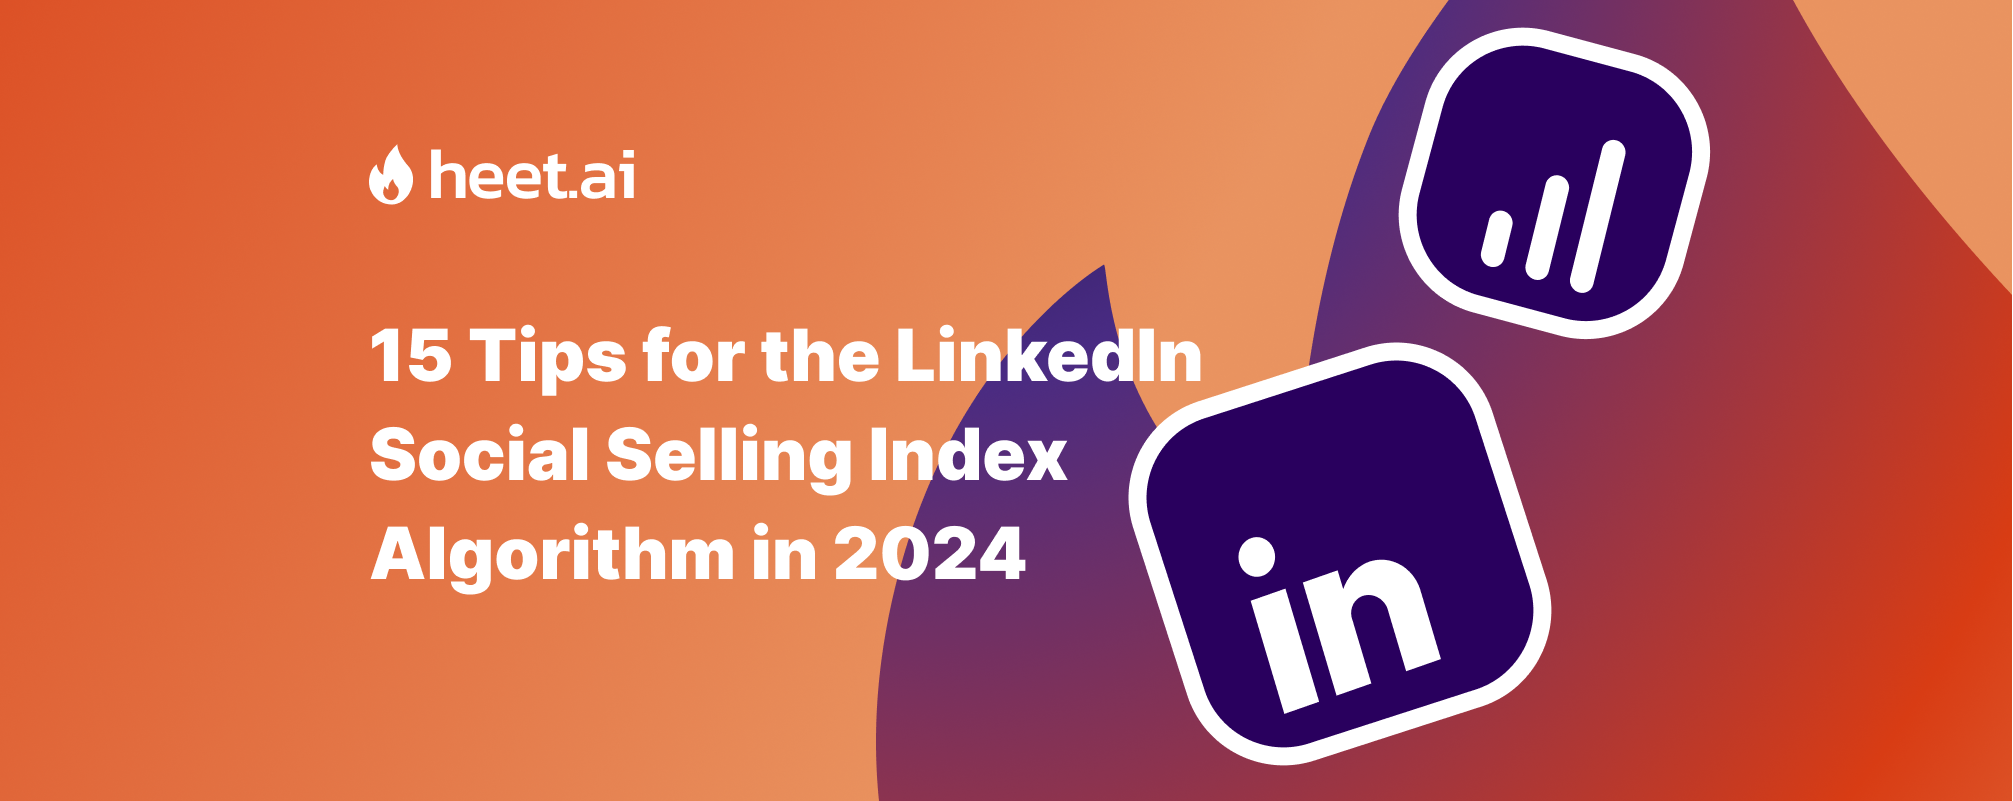 15 Tips for the LinkedIn Social Selling Index Algorithm in 2024